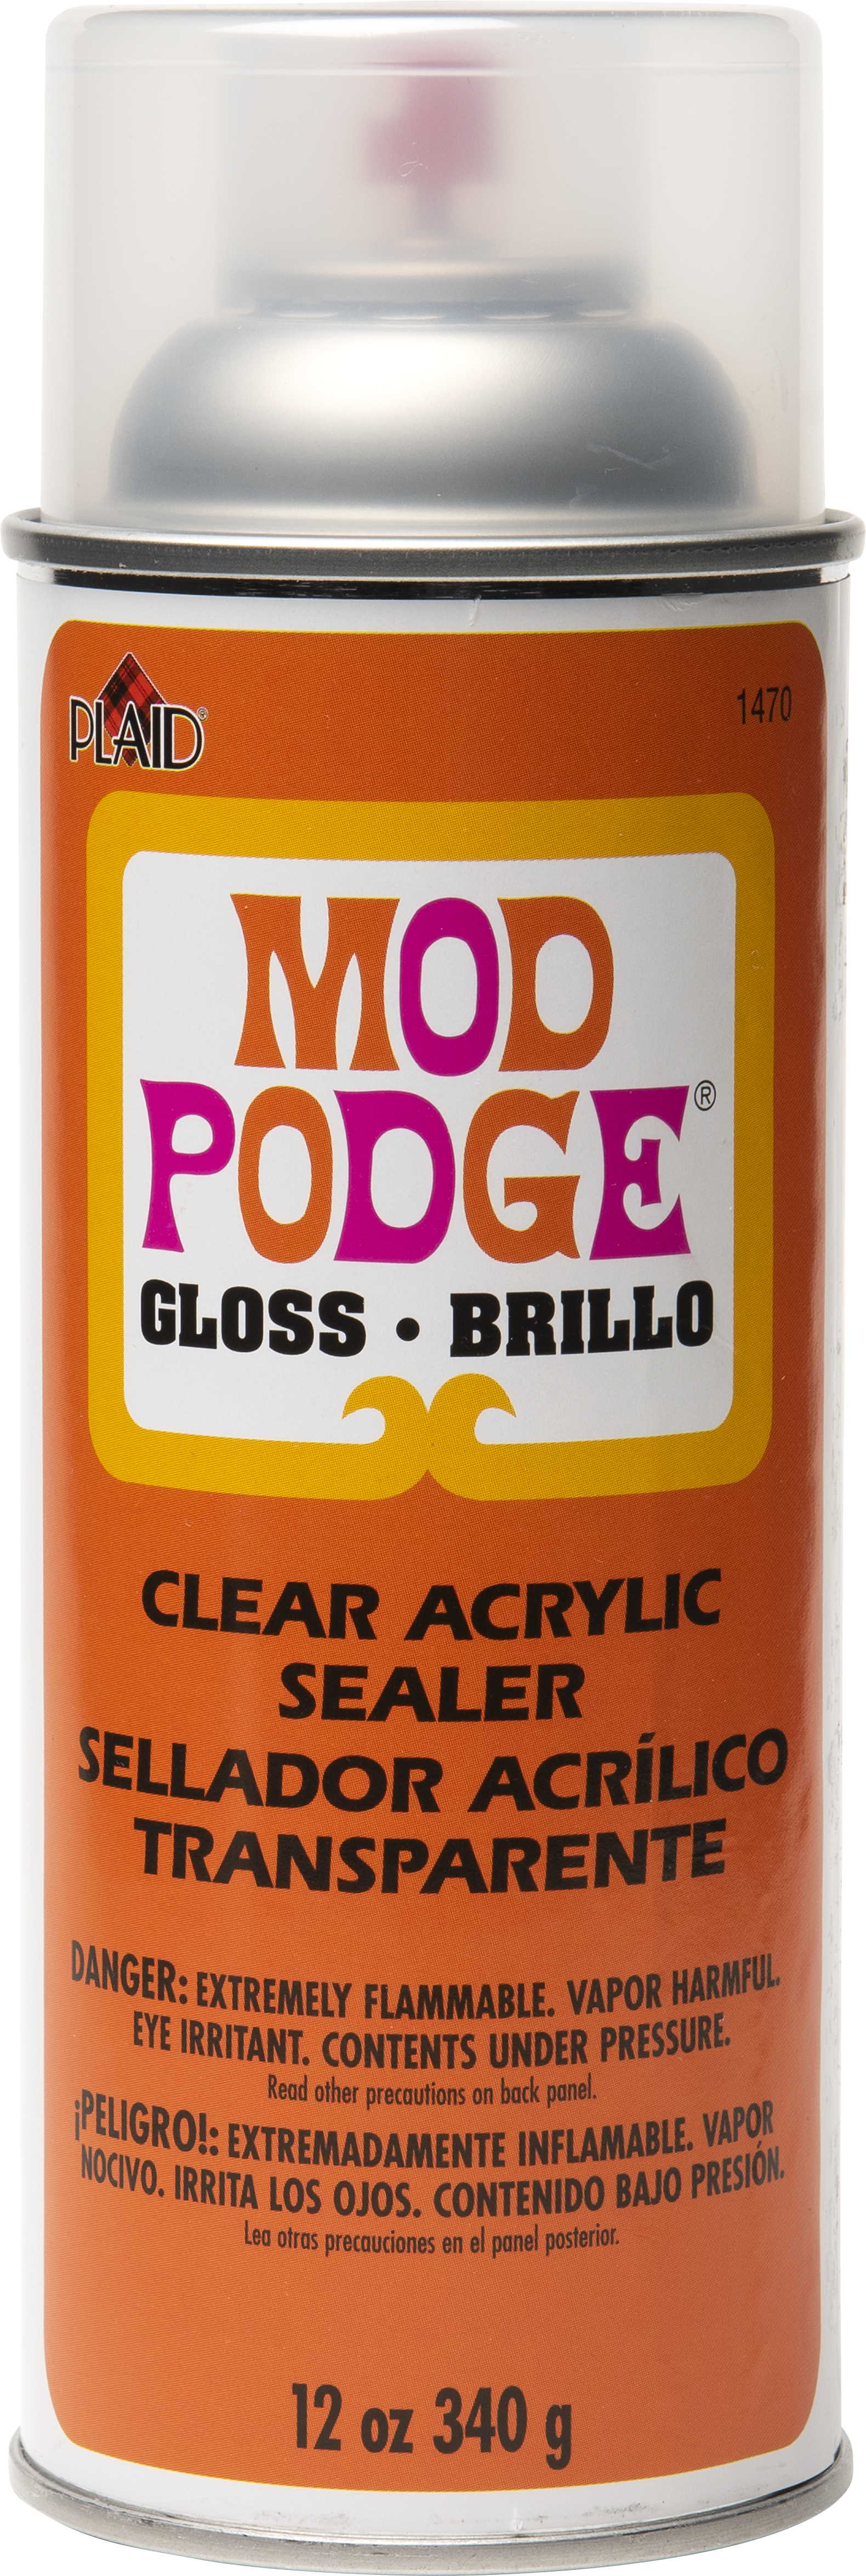 Plaid Mod Podge Clear Acrylic Sealer, Gloss - image 1 of 8